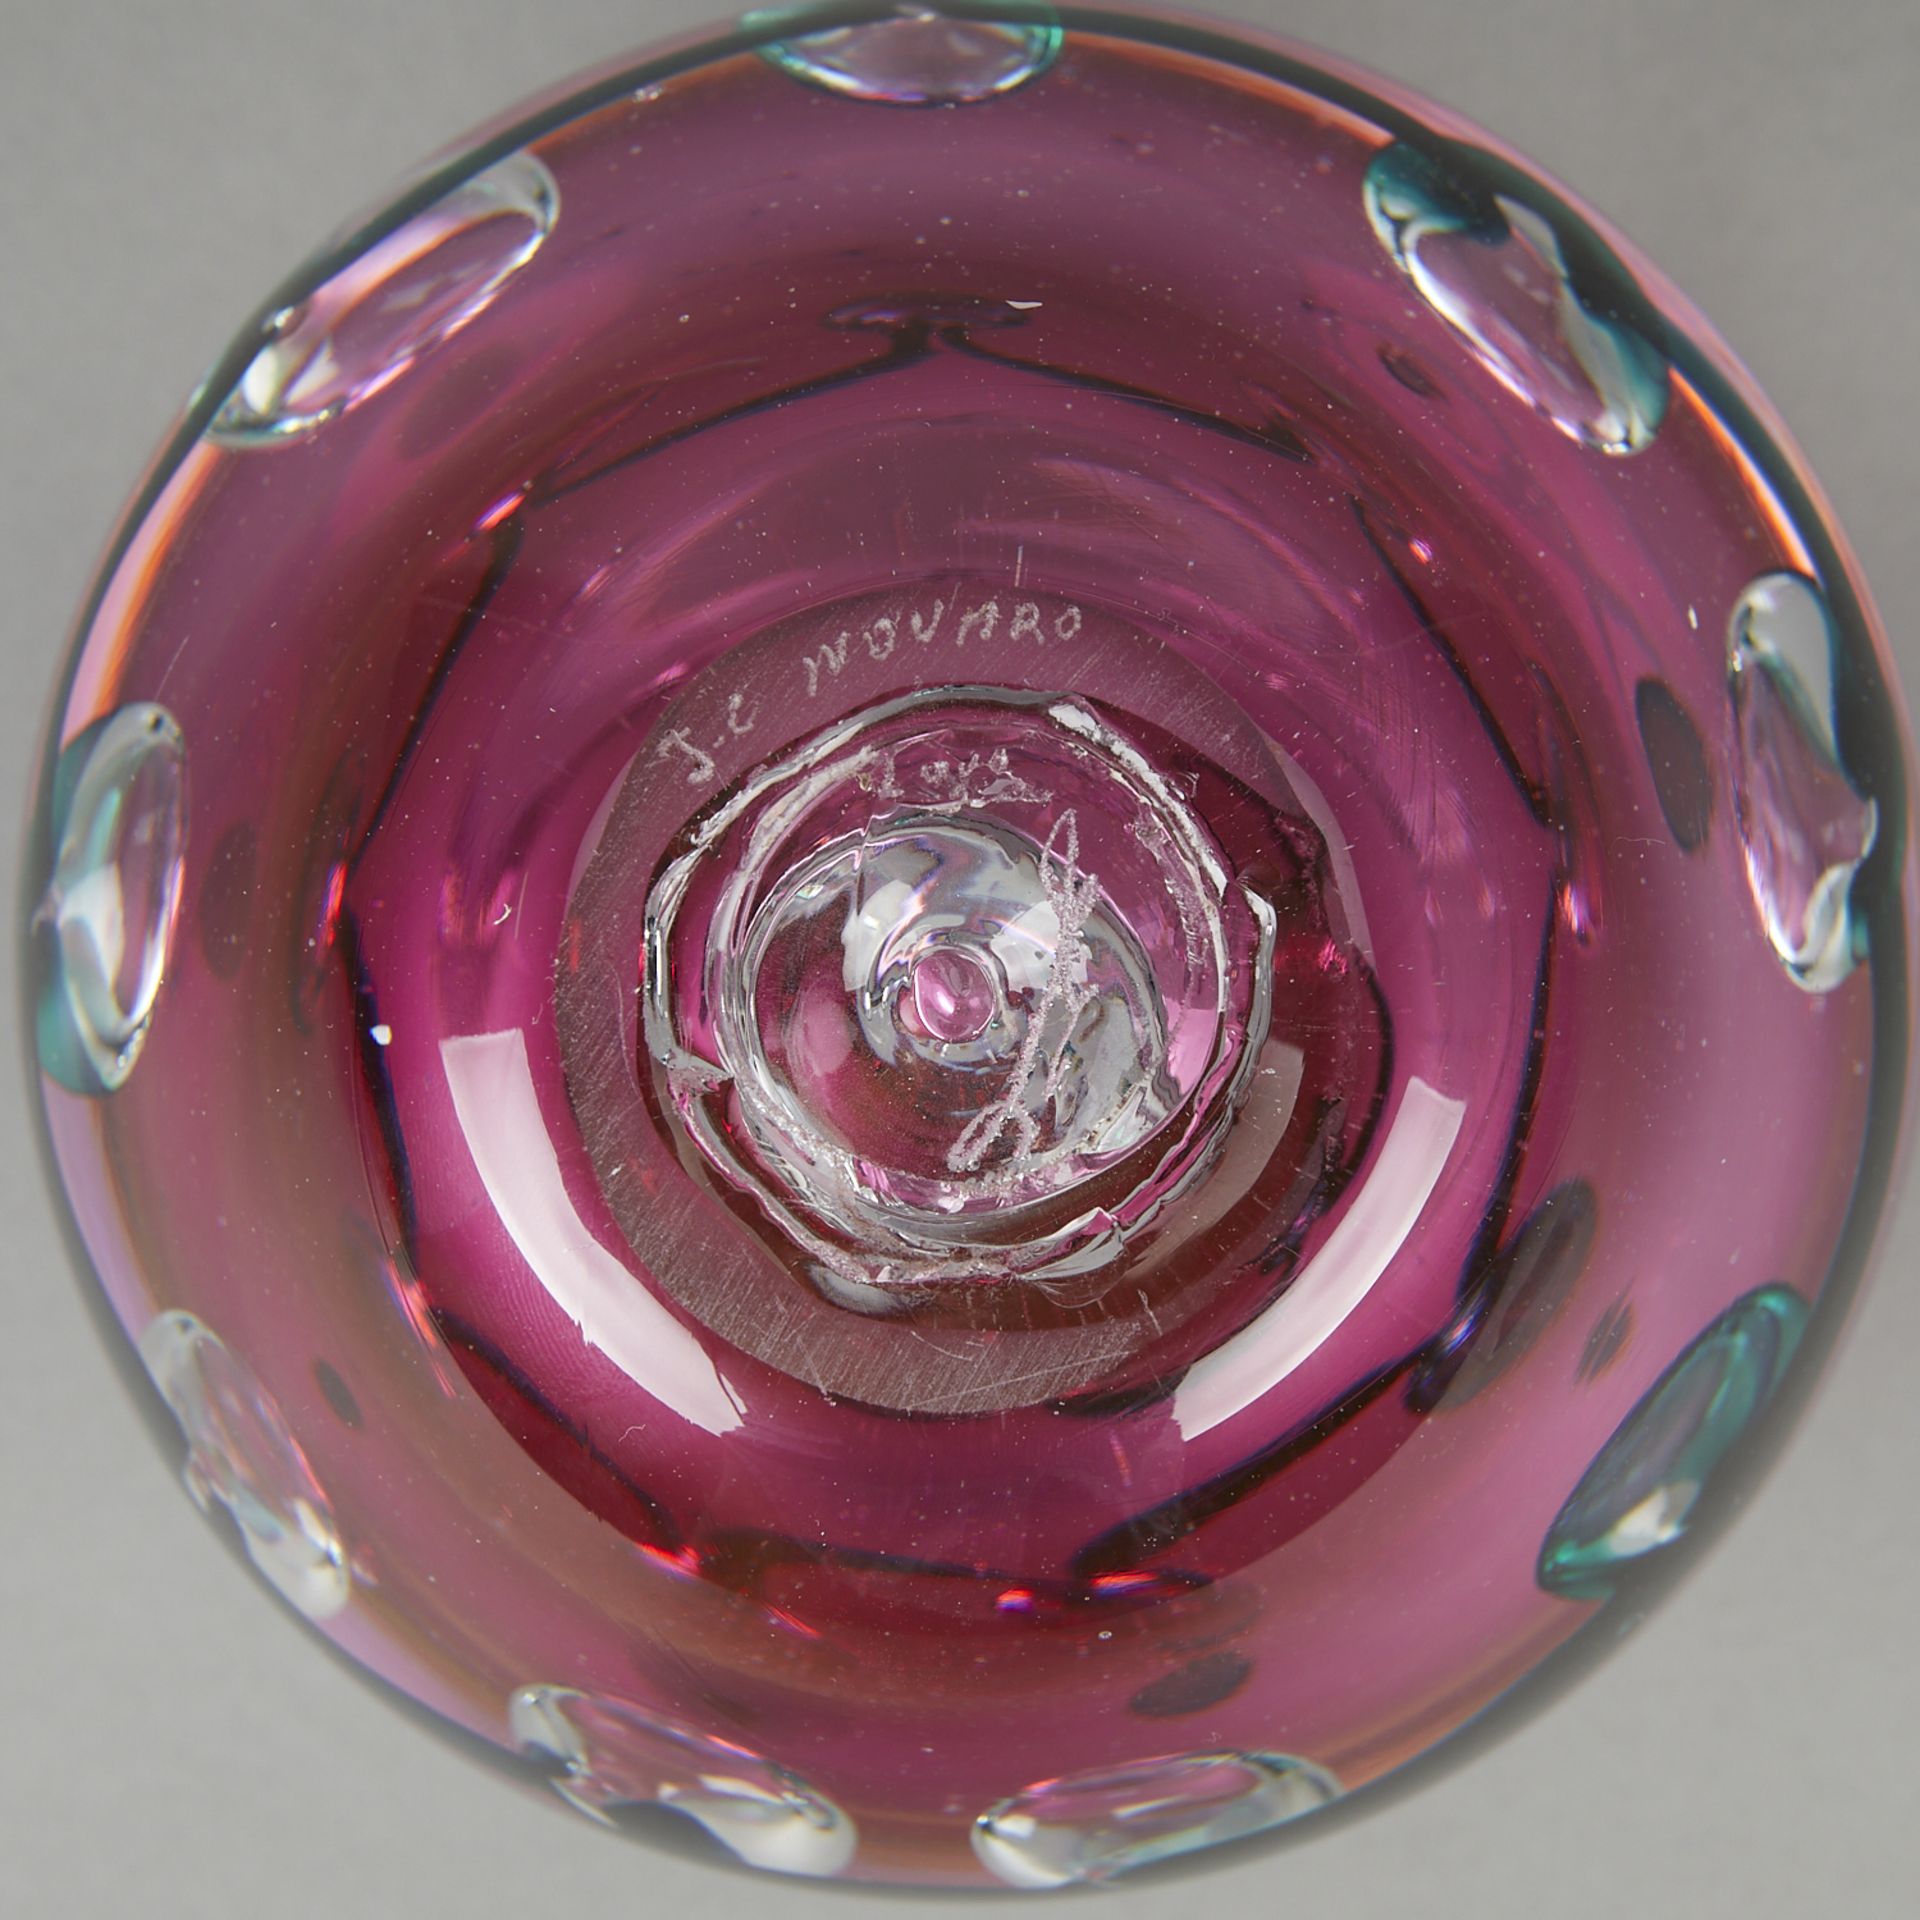 Jean-Claude Novaro Handblown Glass Vase 2000 - Image 8 of 8